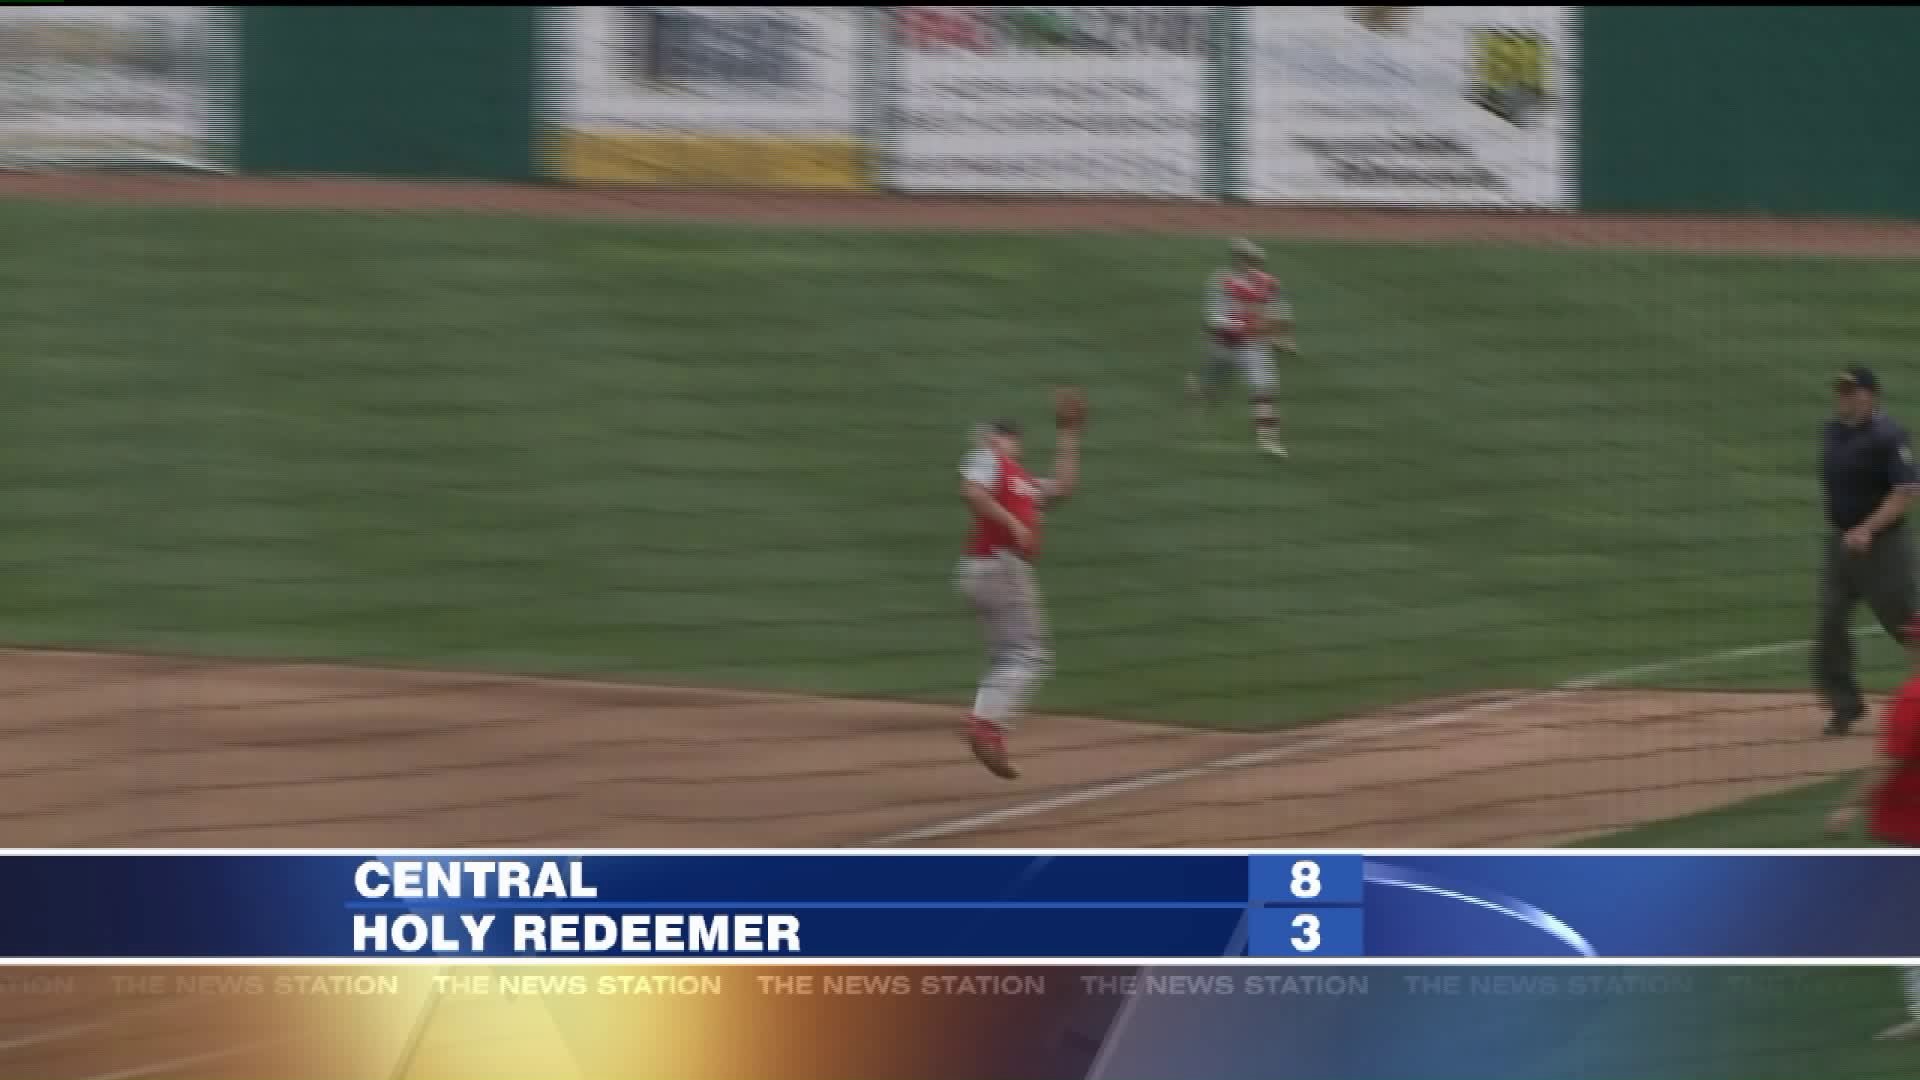 Holy Redeemer vs Central baseball title game